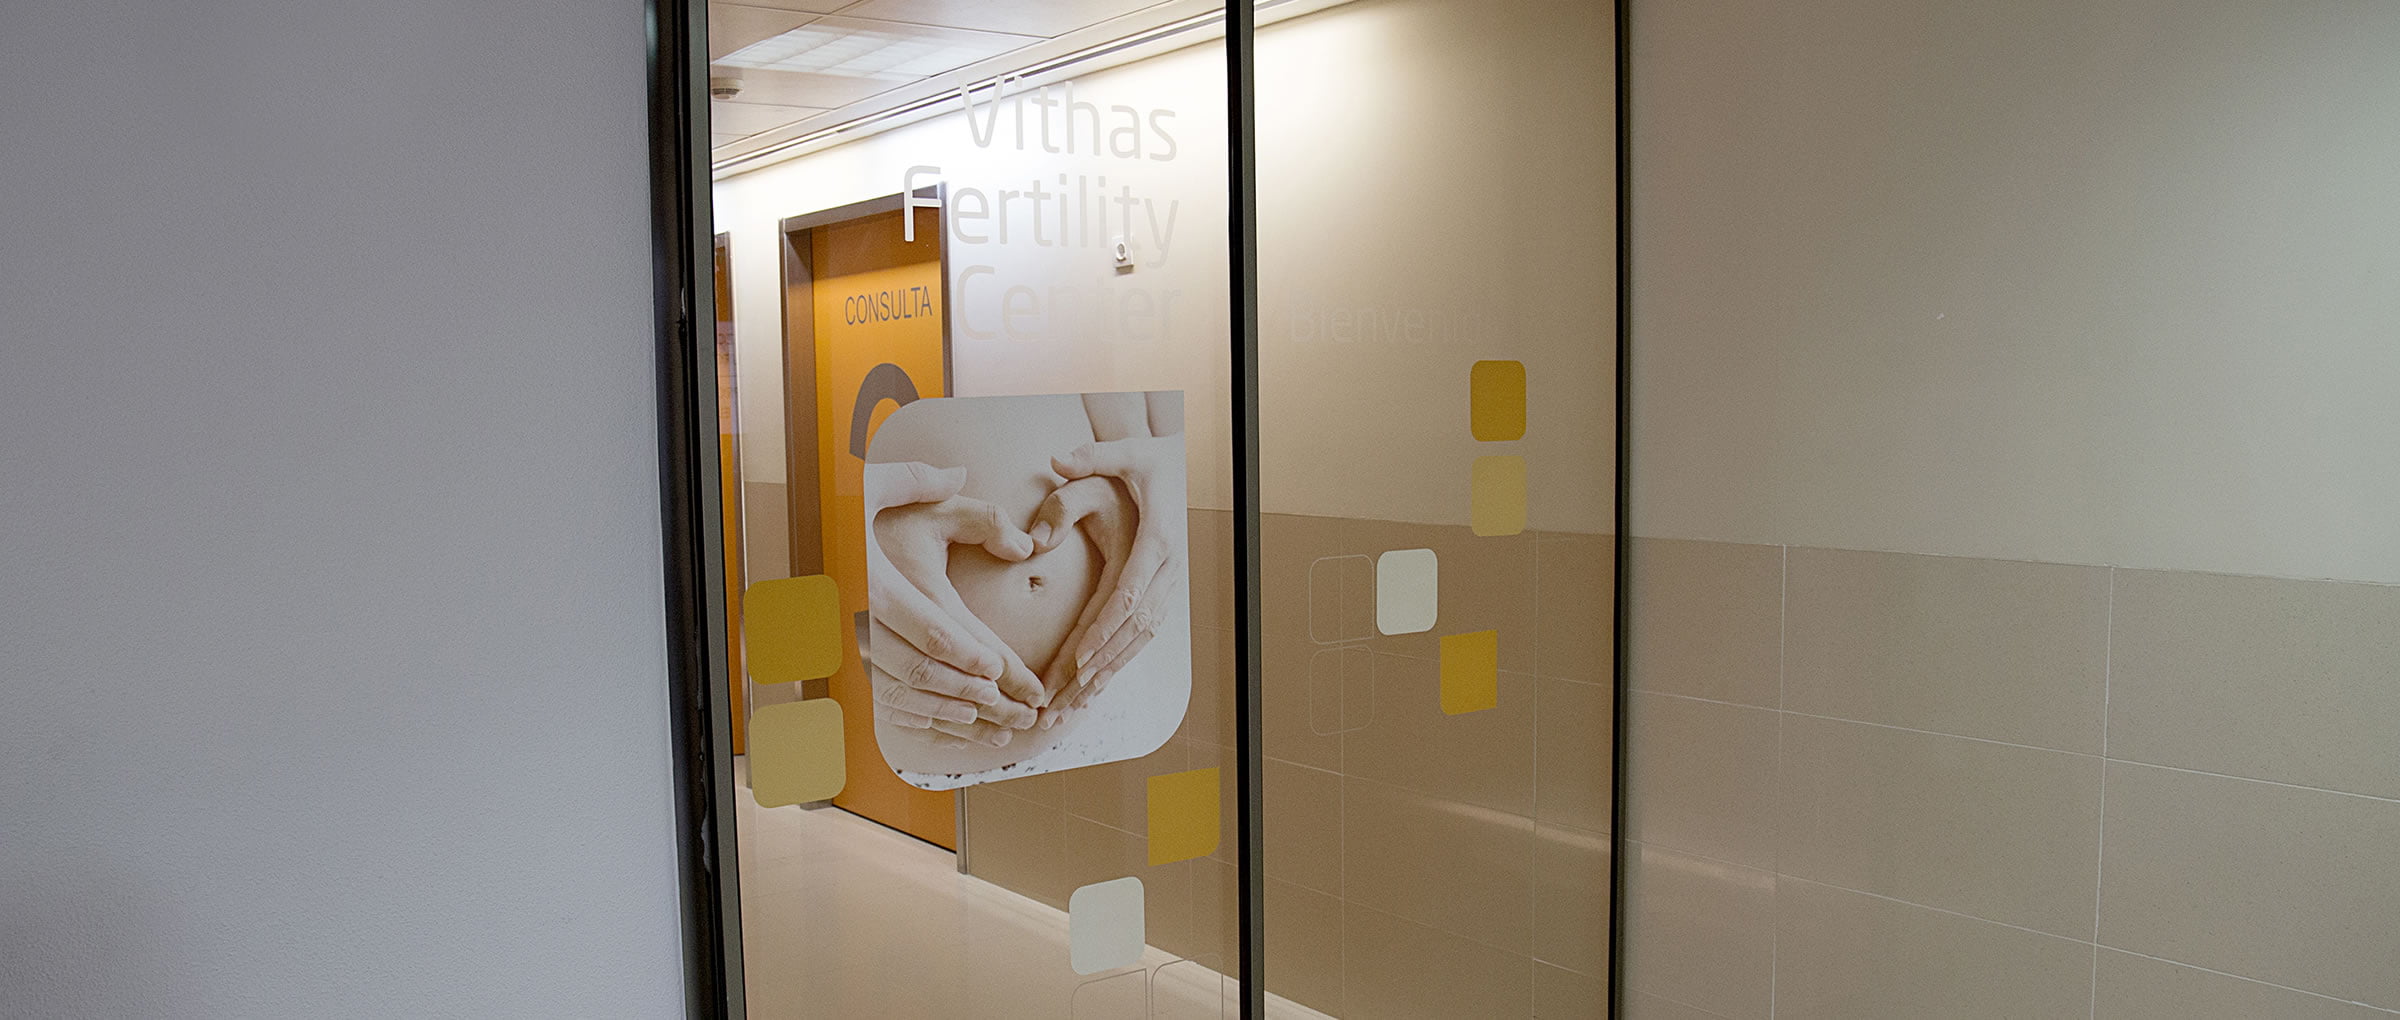 Unidad Phi Fertility Center entrata